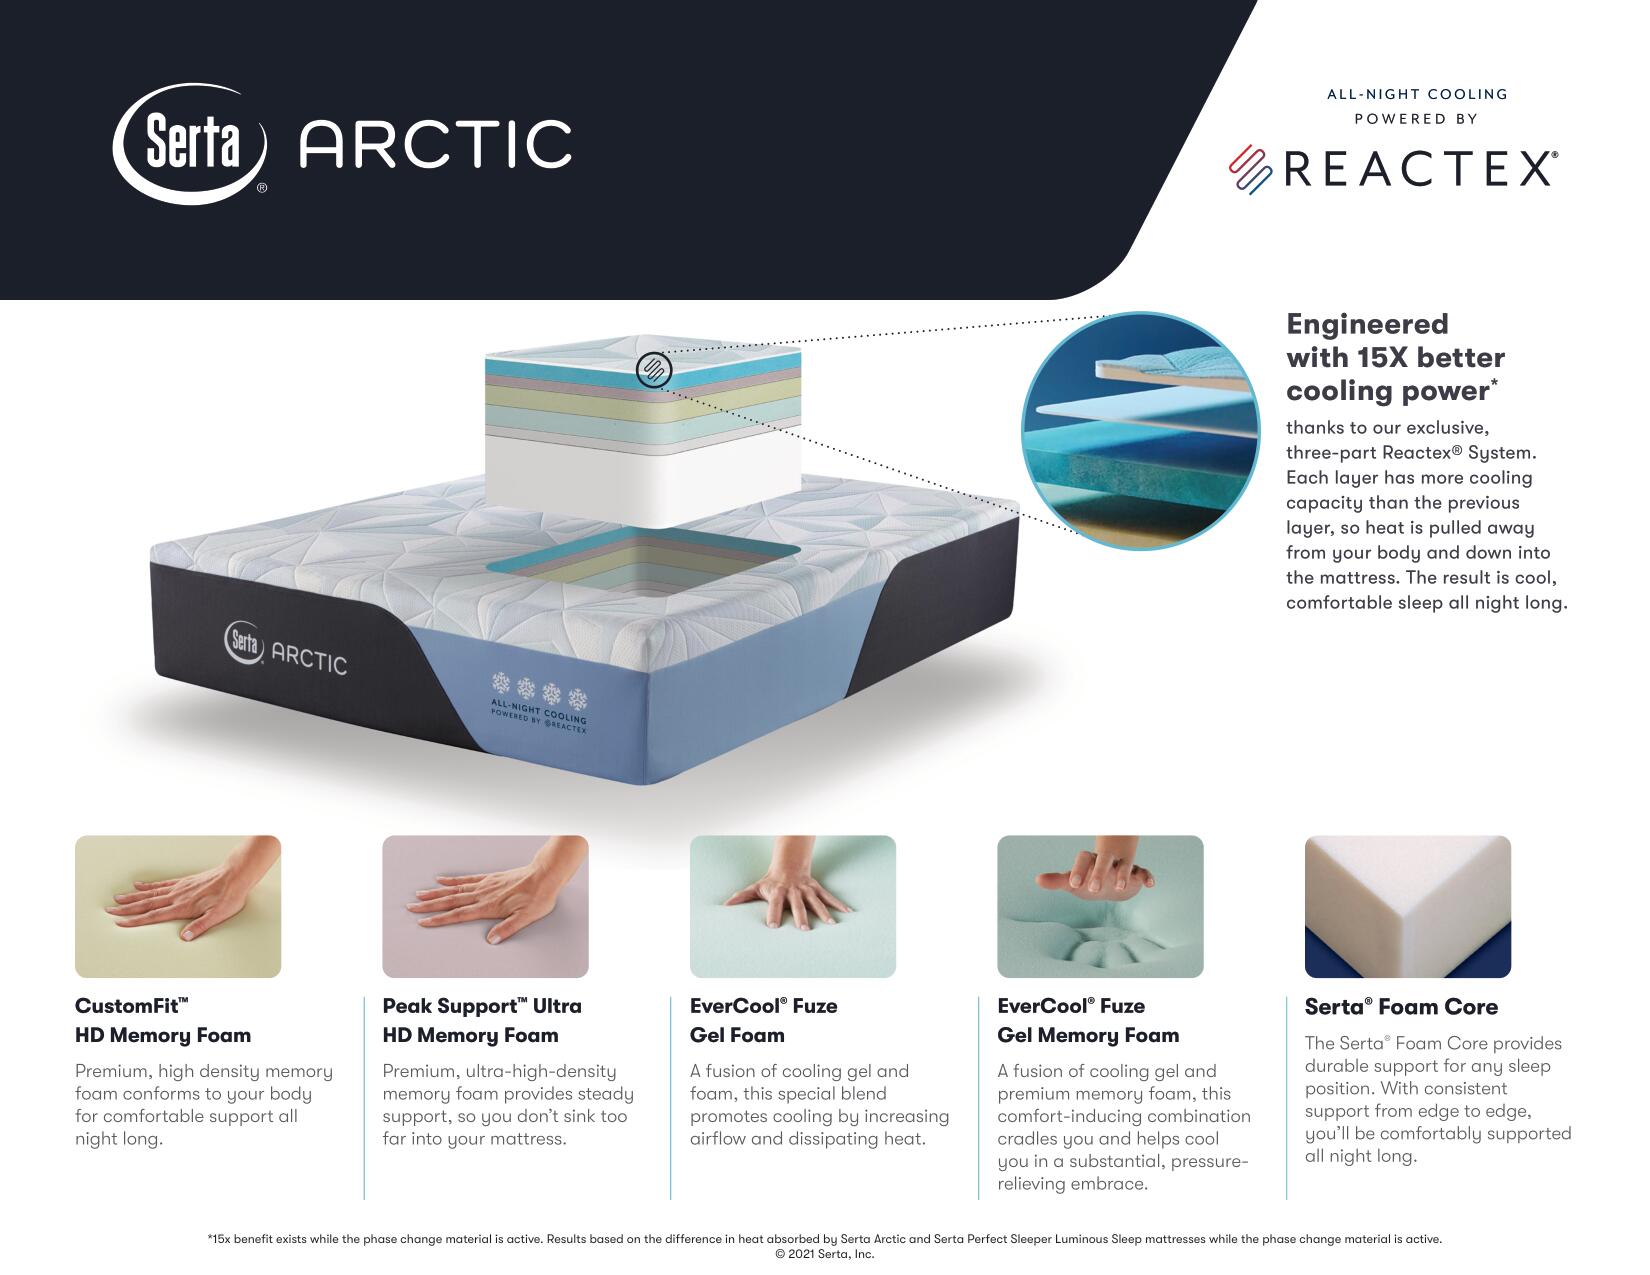 Serta Arctic Memory Foam mattress informational cutaway